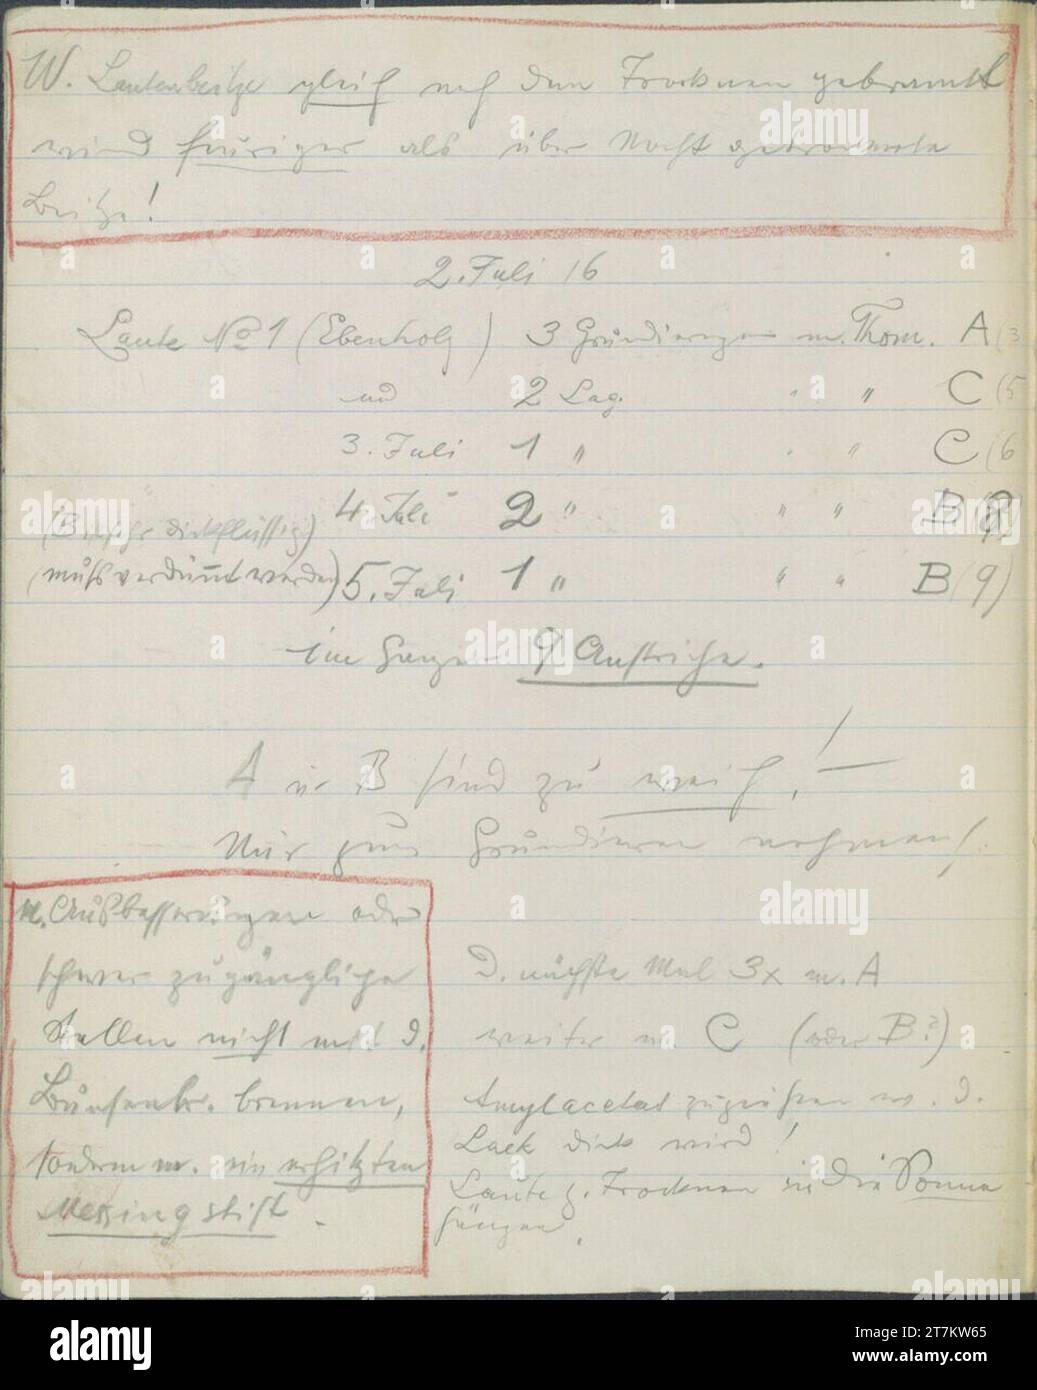 Richard Teschner Notes on a basic process; W. Lauten Beitz. Pencil; Red colored pencil 2. Juli 1916 und folgende Tage (Sketchbook: 1915-1947) Stock Photo